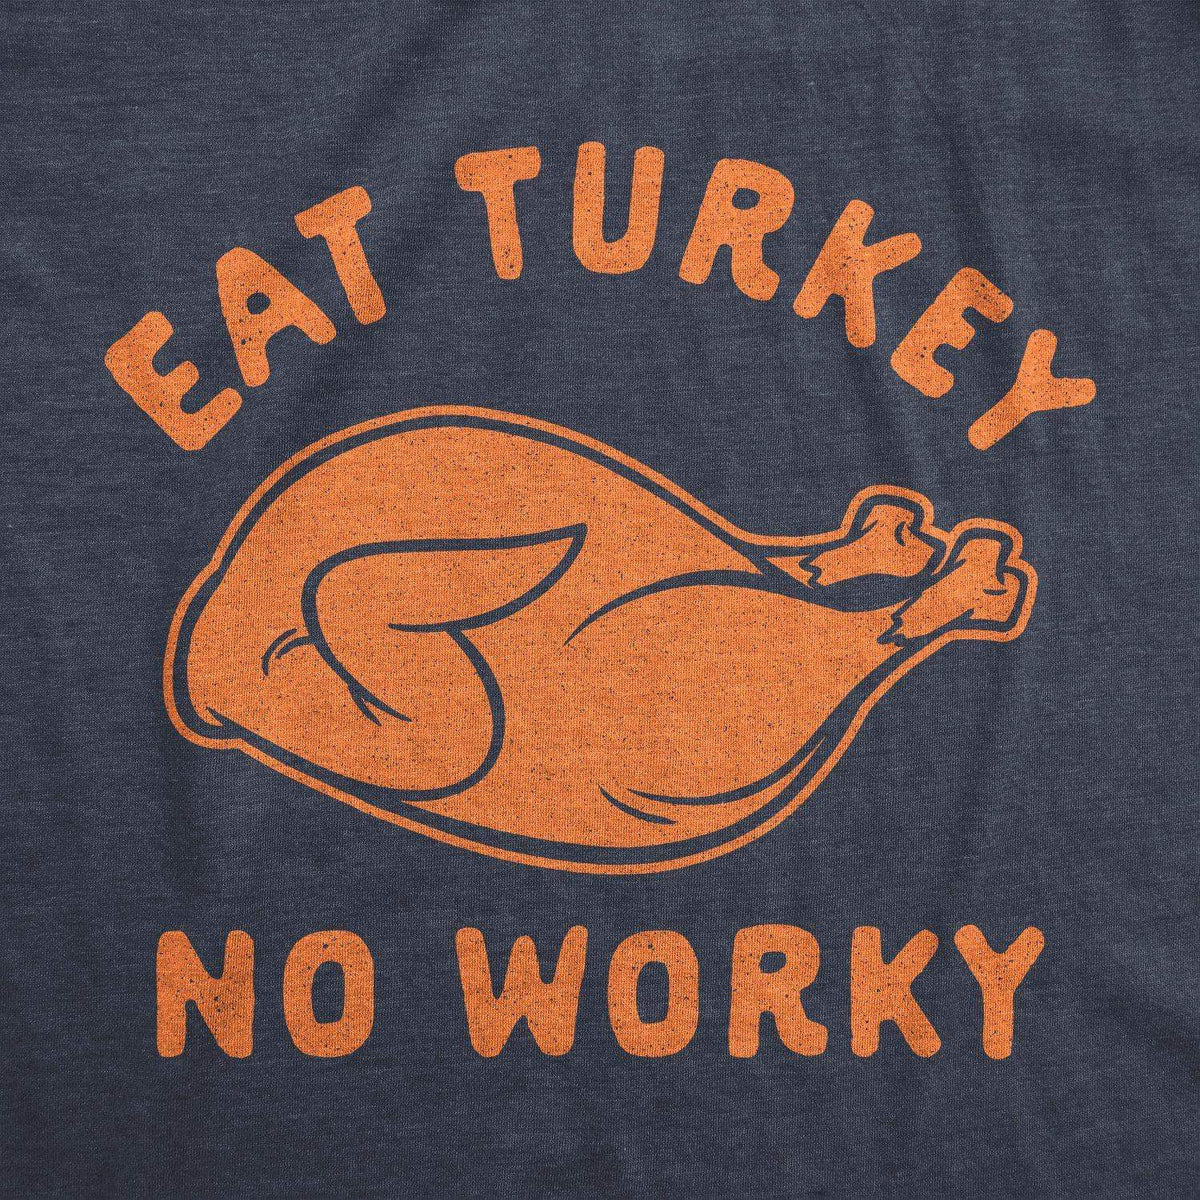 Eat Turkey No Worky Men&#39;s Tshirt - Crazy Dog T-Shirts